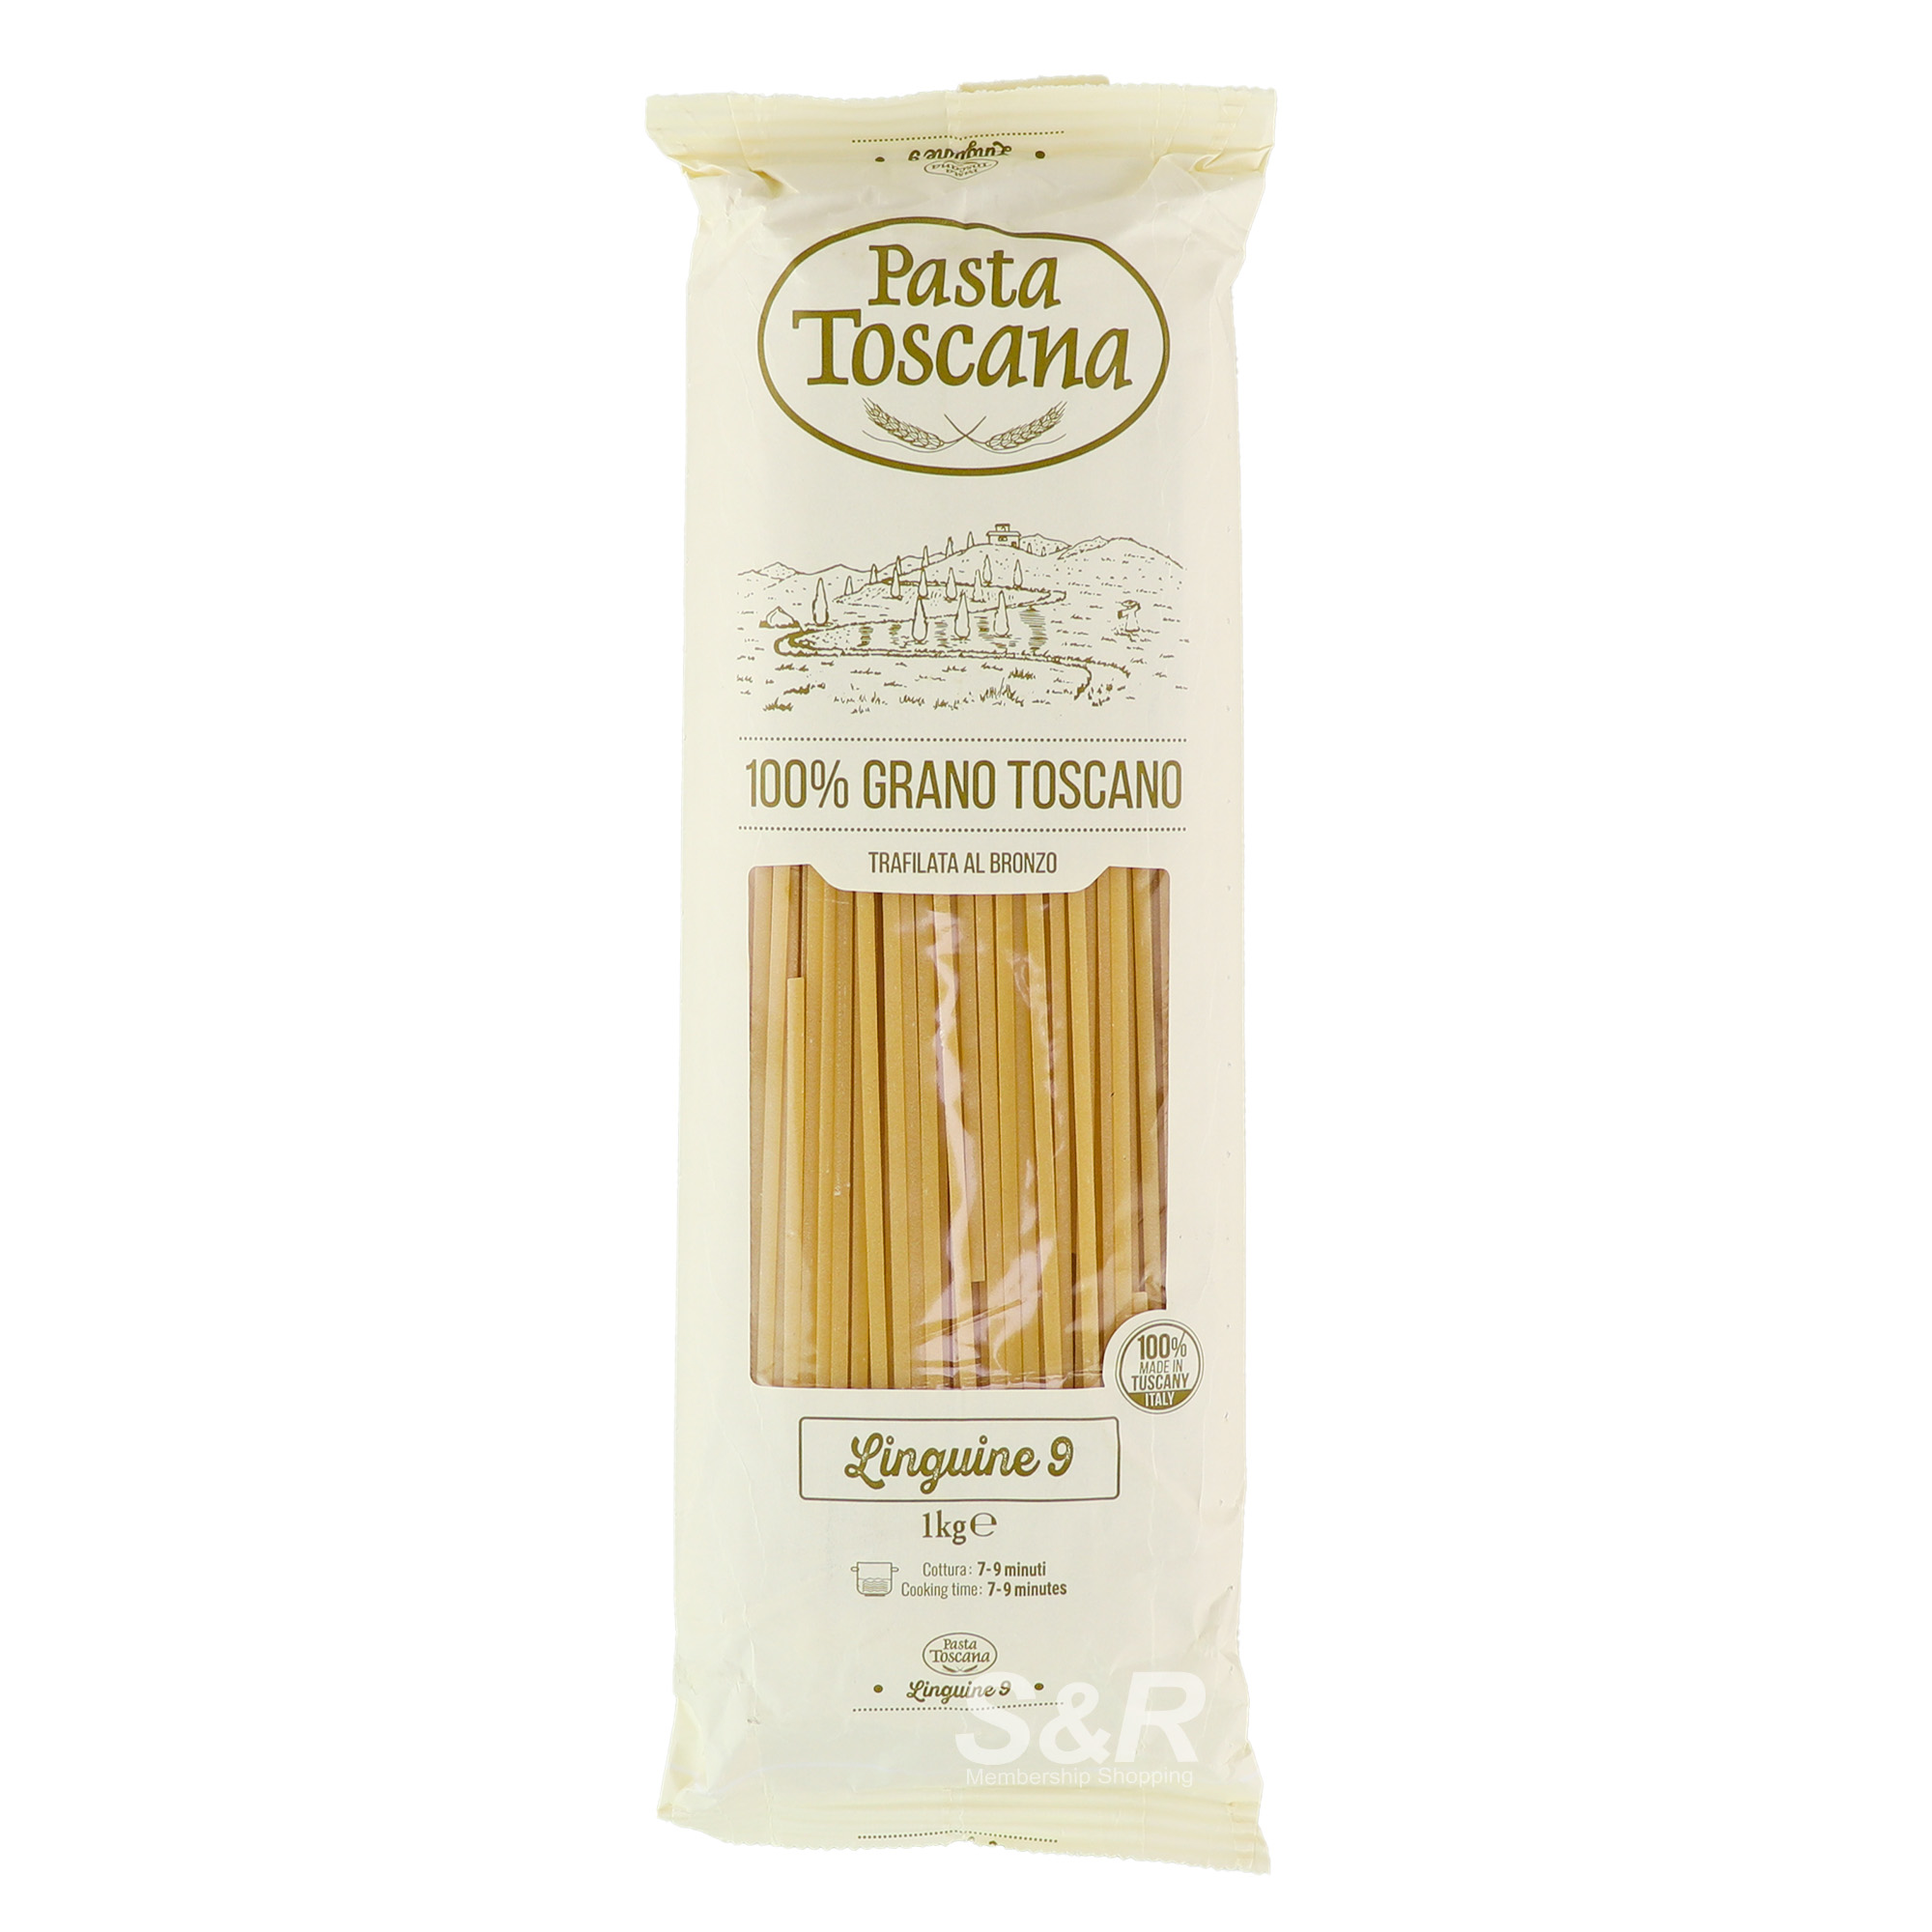 Pasta Toscana Linguine 9 1kg